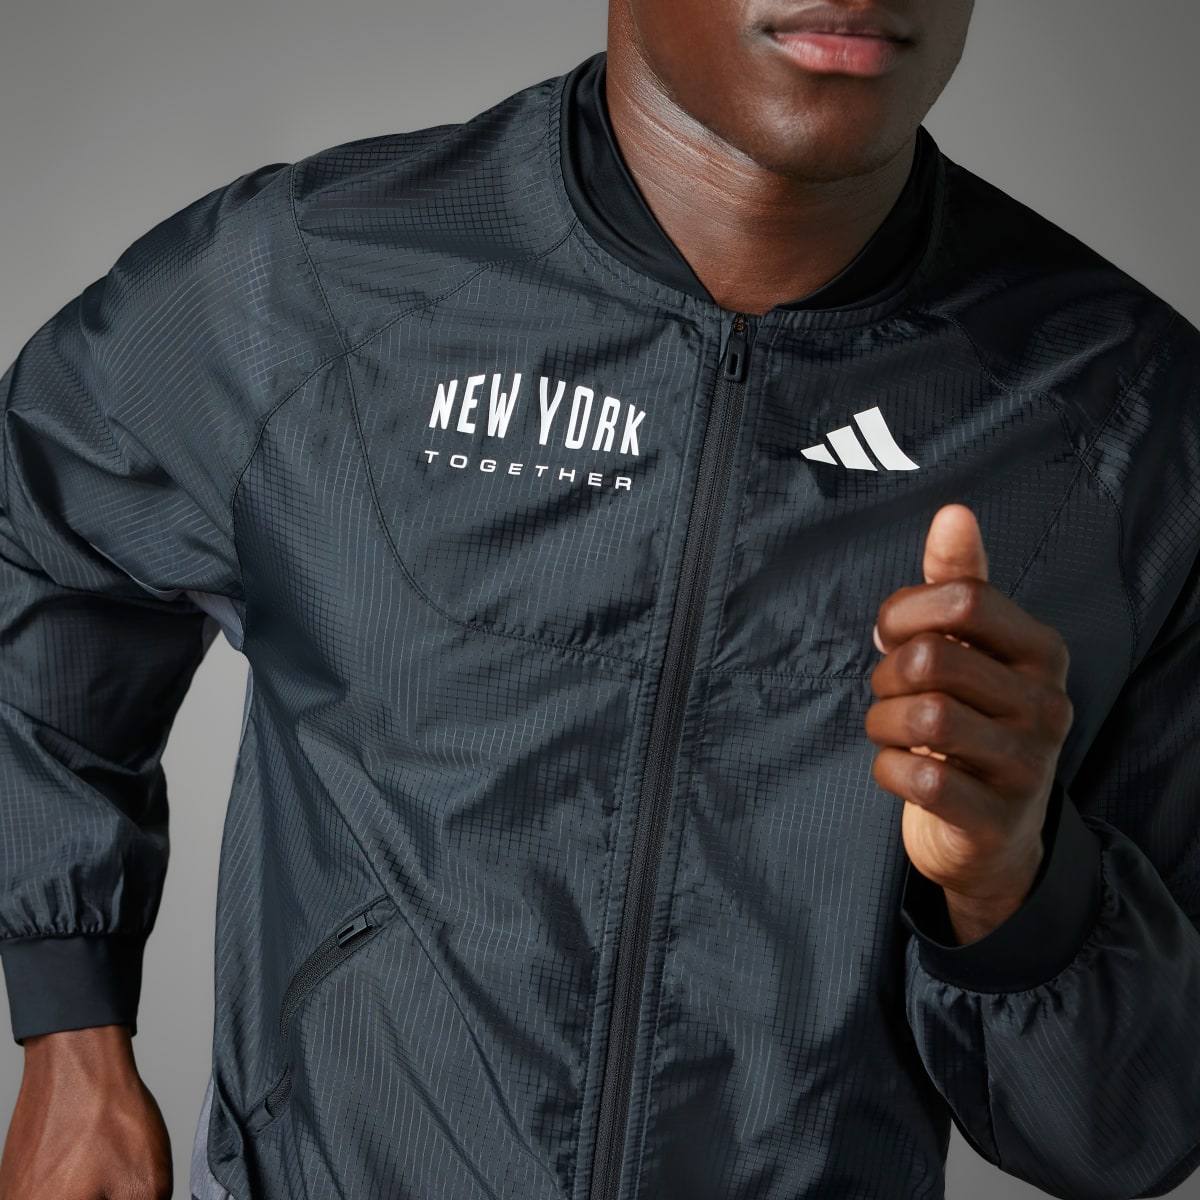 Adidas NYC Running Jacket (Gender Neutral). 6